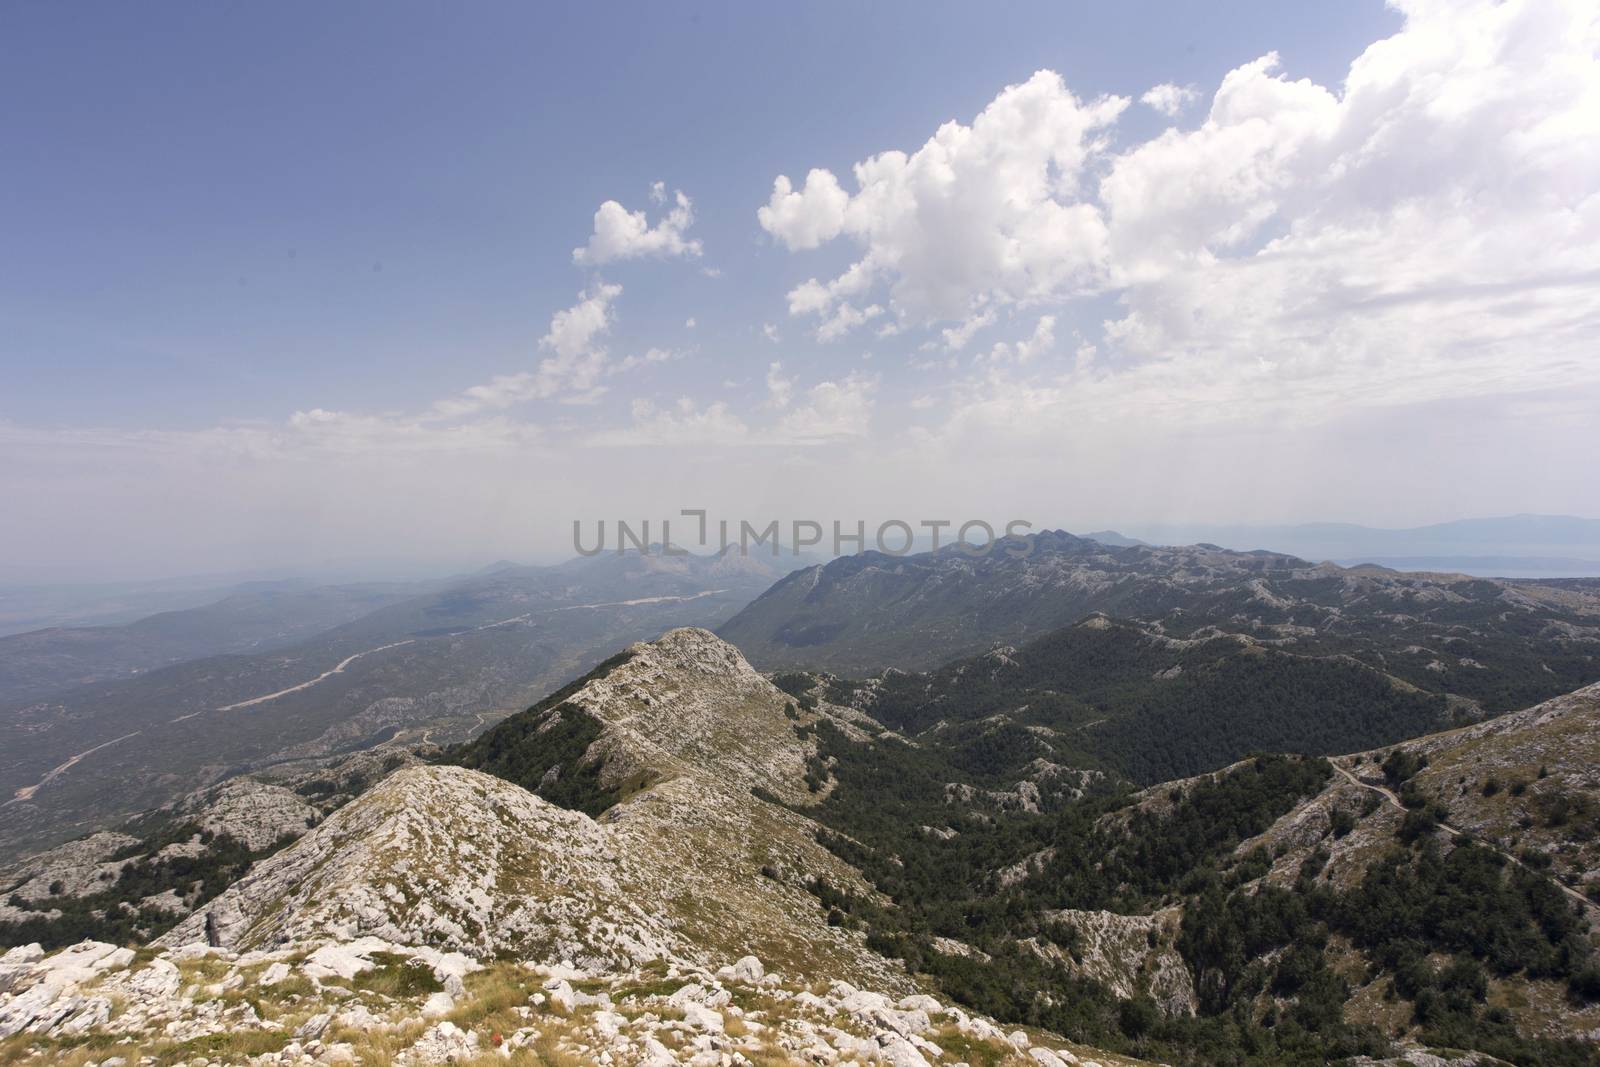 View of biokovo mountain in croatia close to podgora